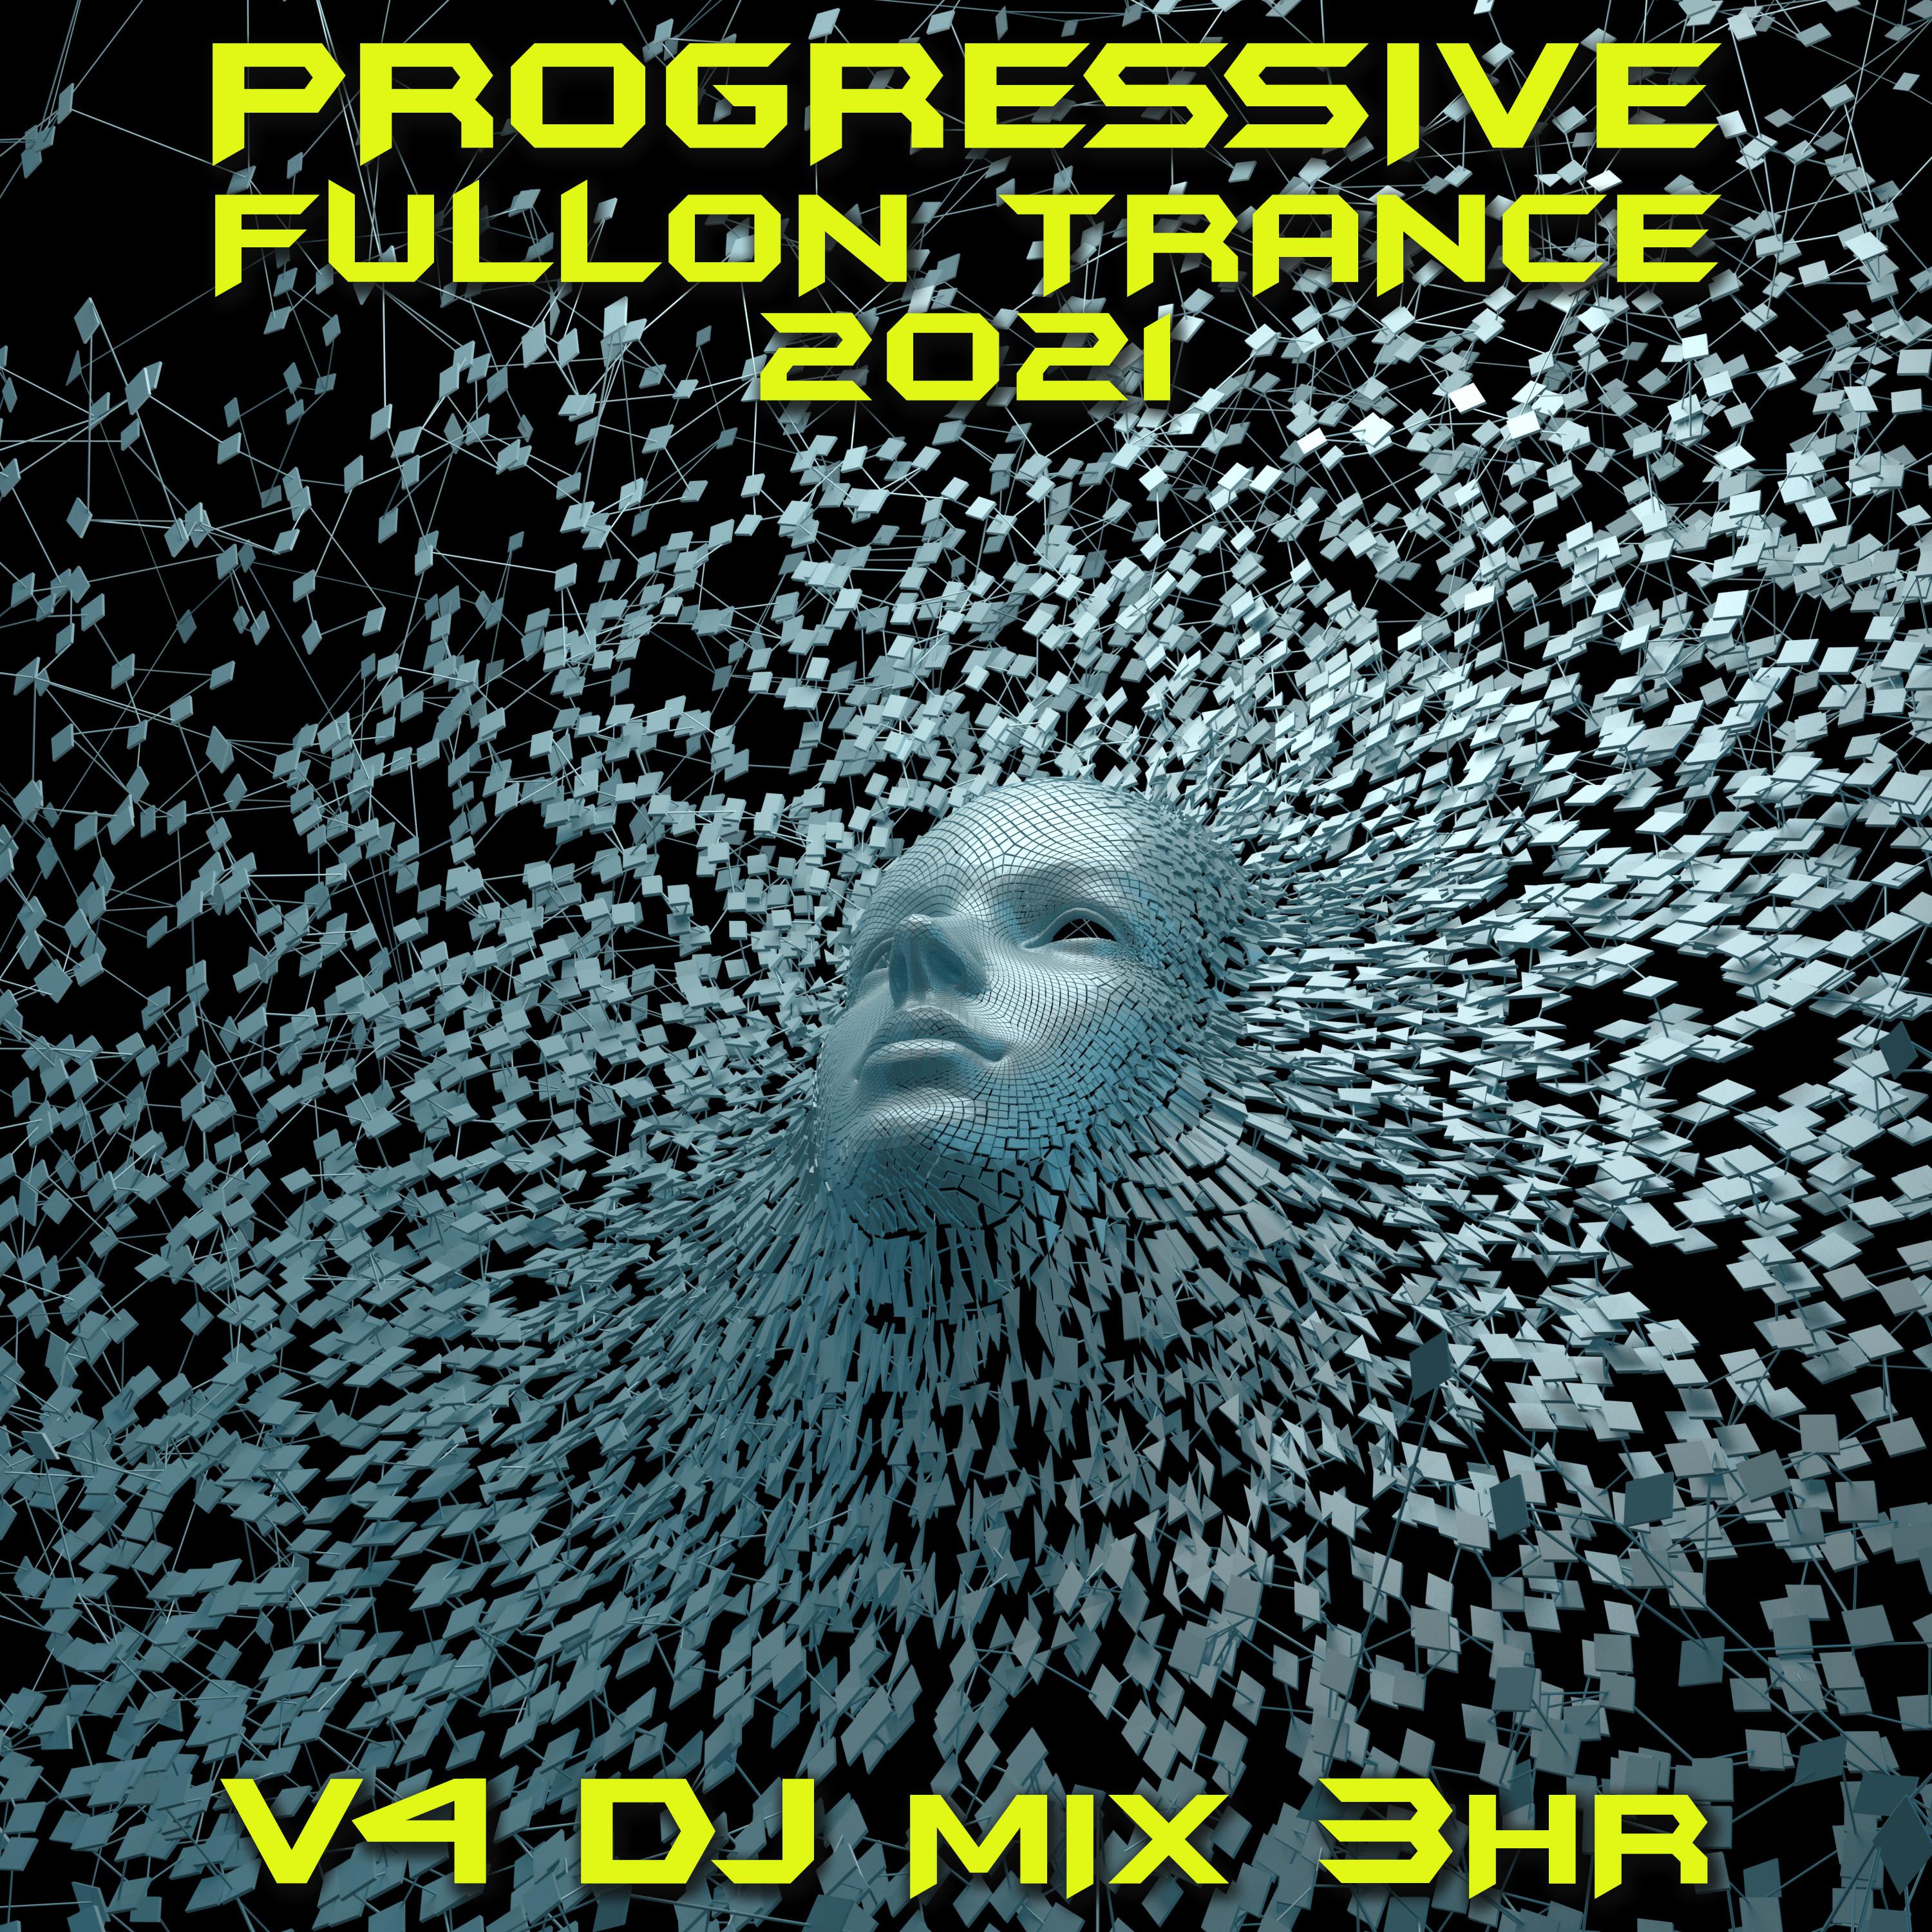 Studiofreakz - Urban Forest (Progressive Fullon Trance 2021 DJ Mixed)